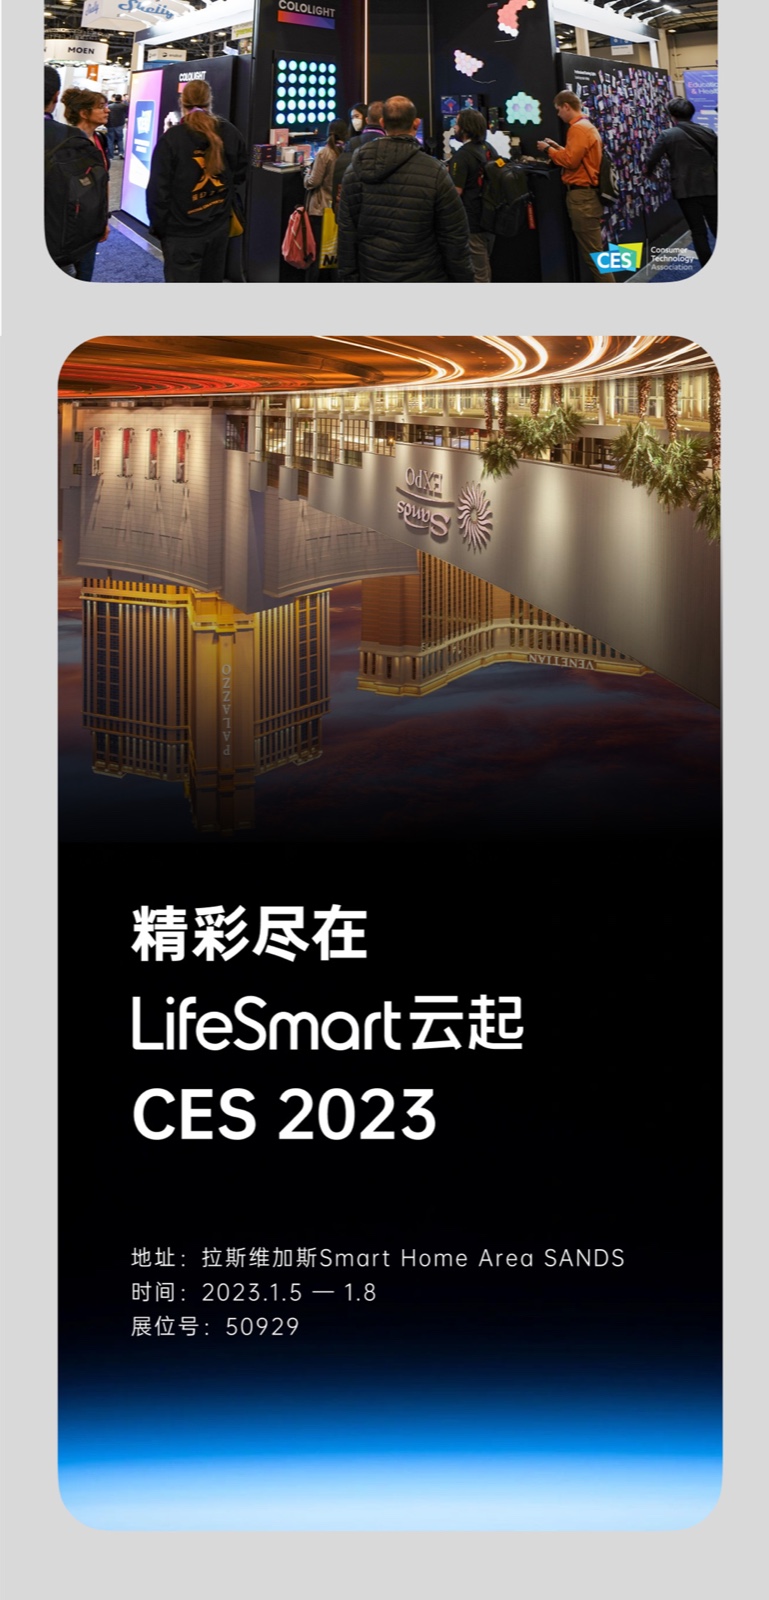 CES 2023，LifeSmart云起闪耀Las Vegas